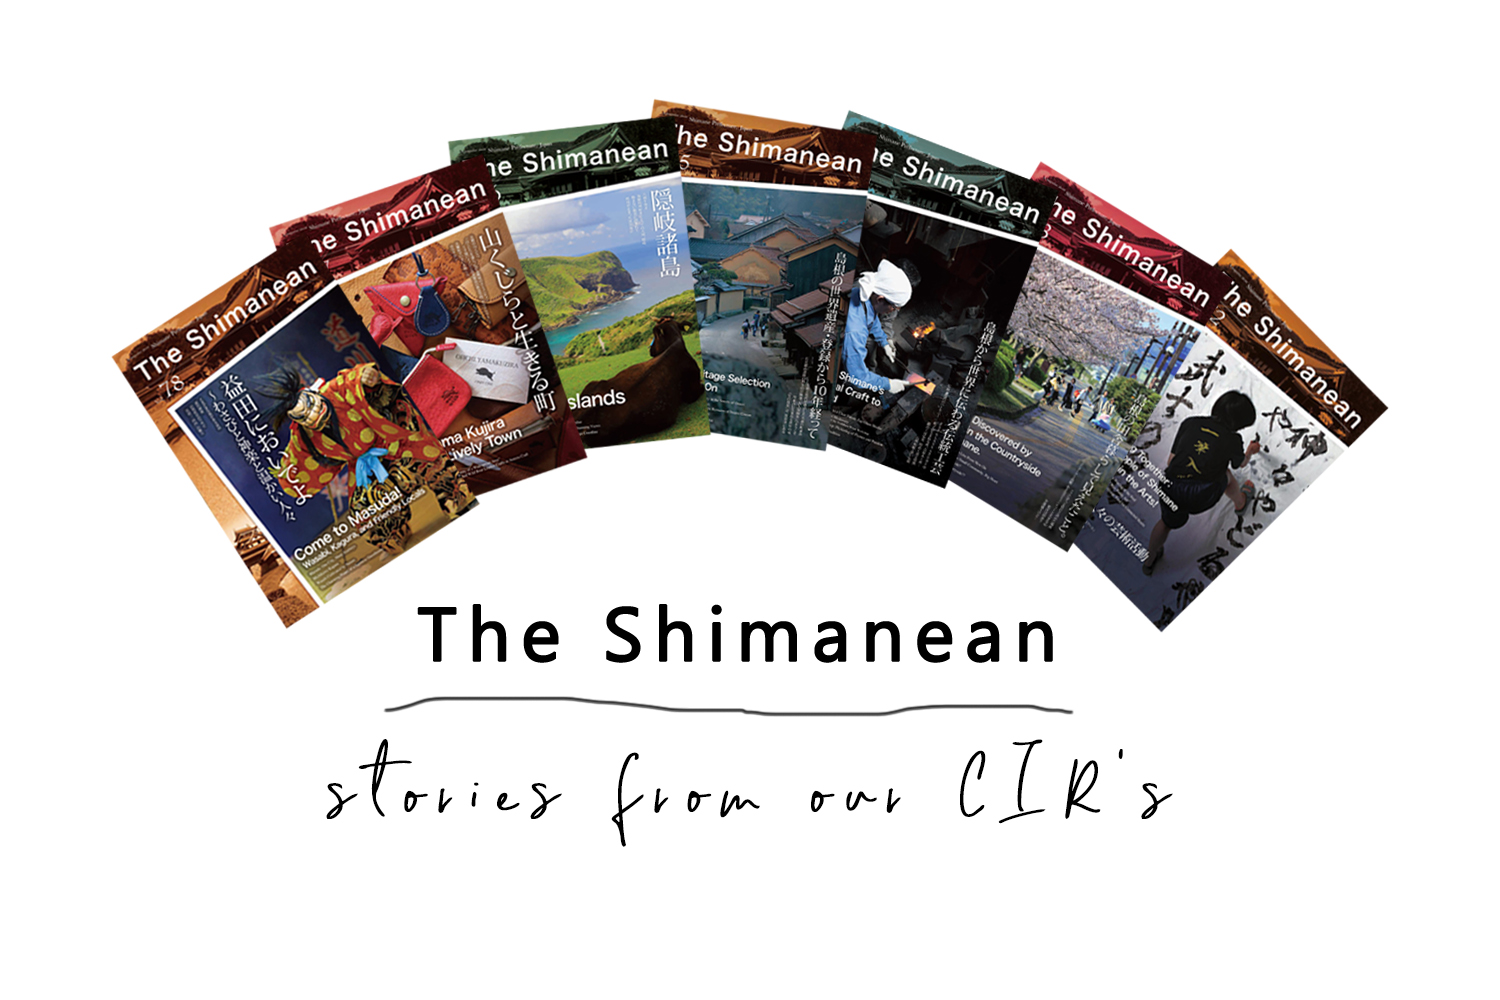 Shimanean magazine spread